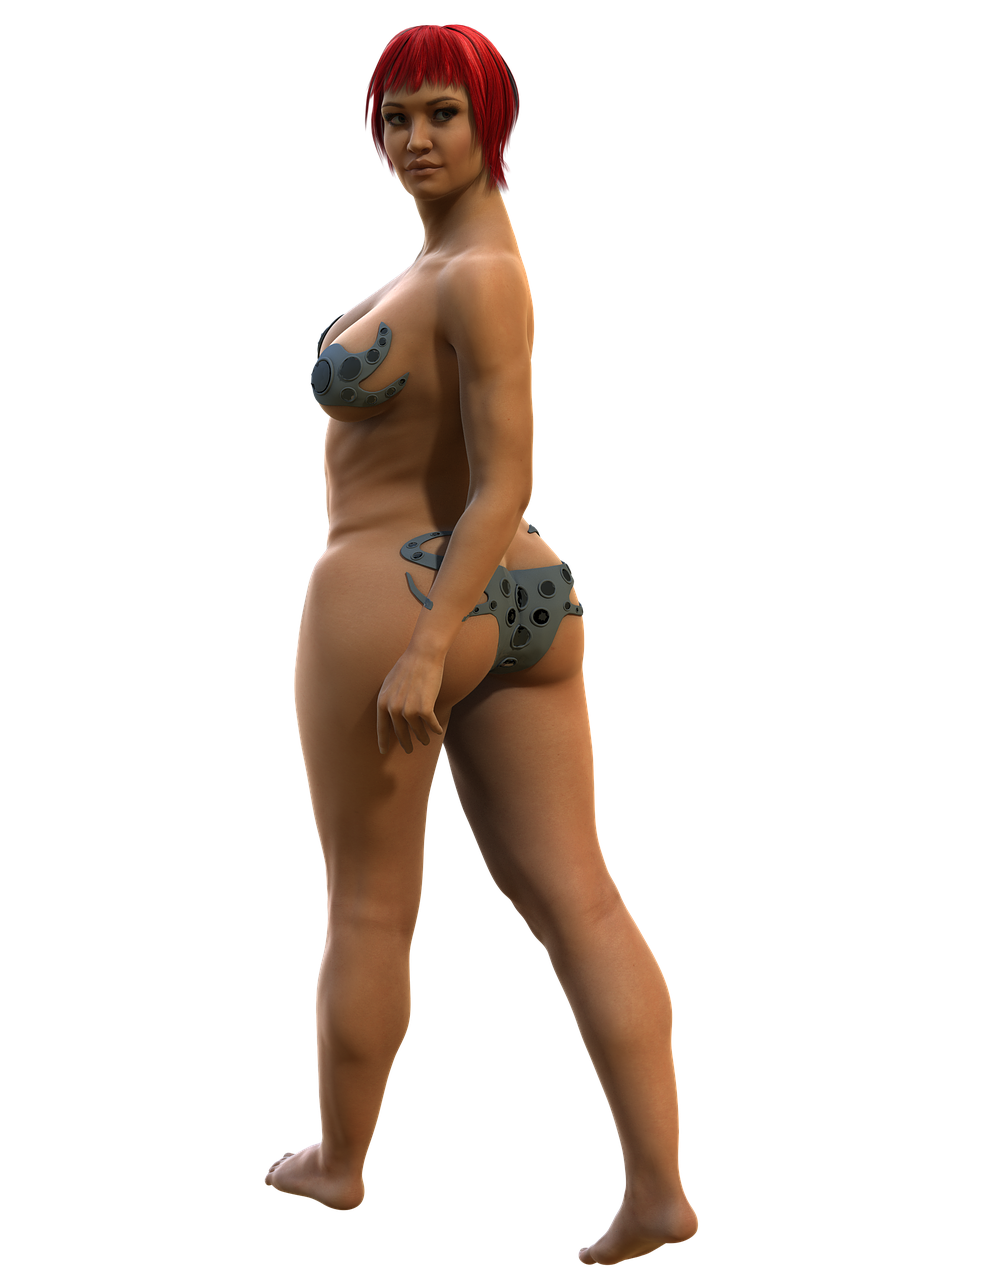 plus-size woman bikini free photo